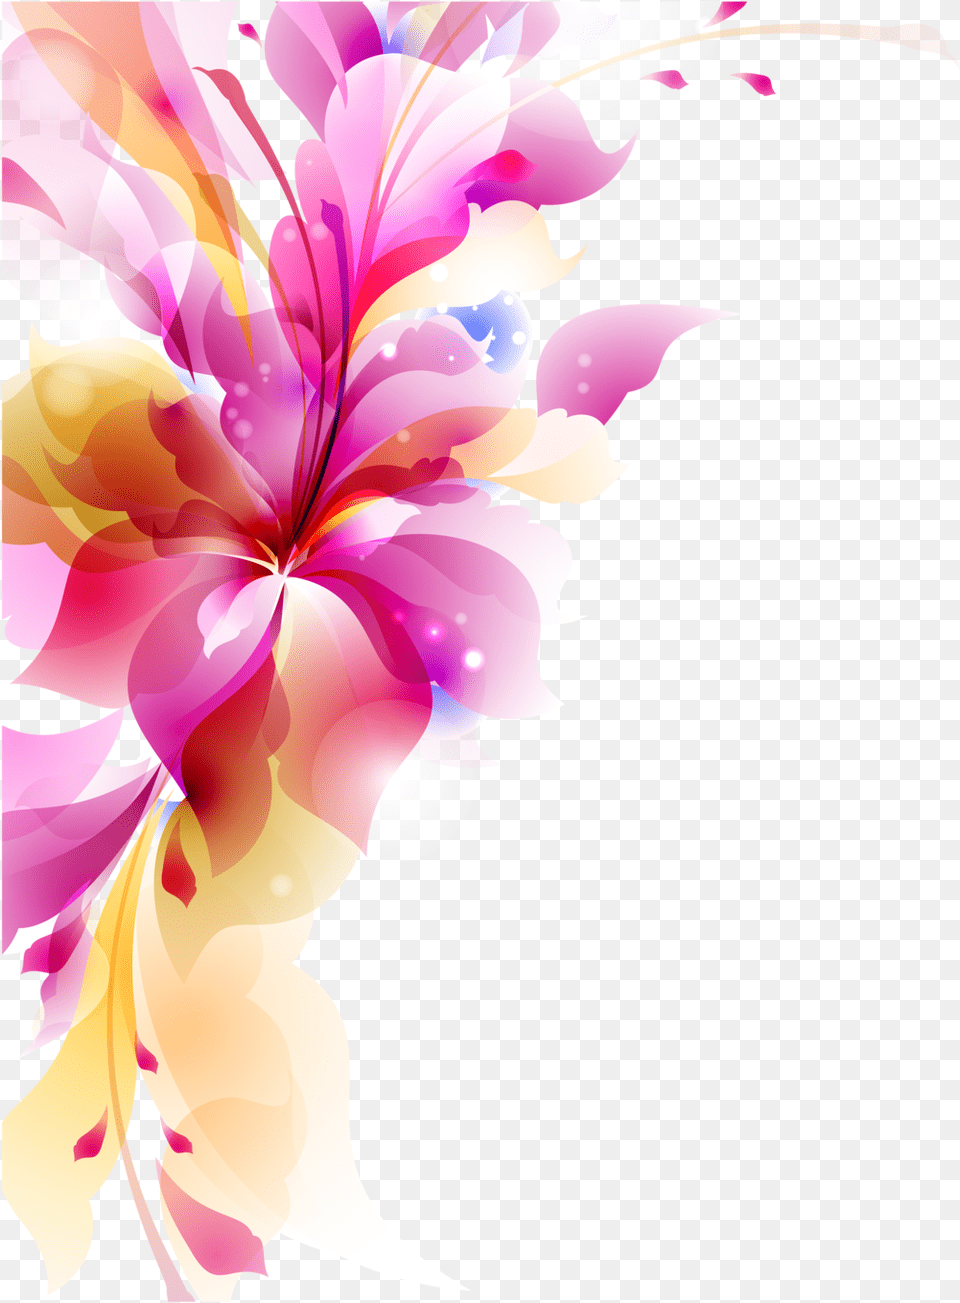 Flowers Vectors Quality Colorful Flower Vector, Art, Floral Design, Graphics, Pattern Png Image